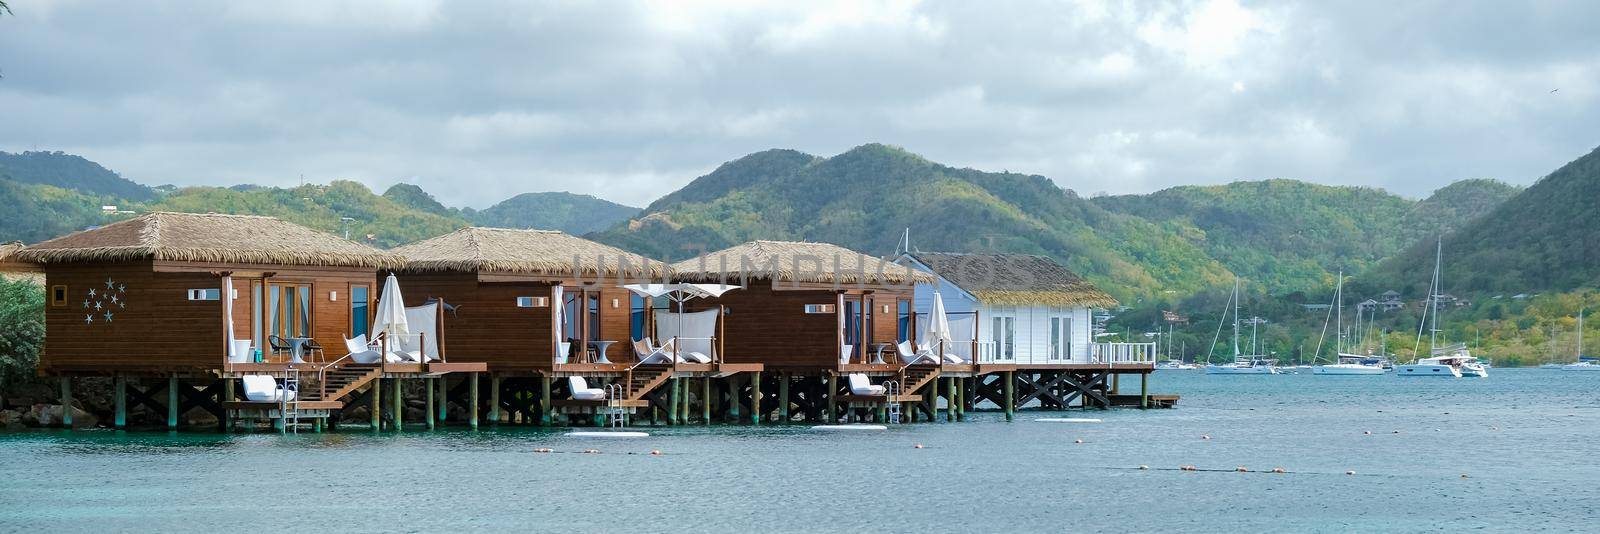 Luxury resort at Saint Lucia Caribbean, Sandal resort St Lucia by fokkebok